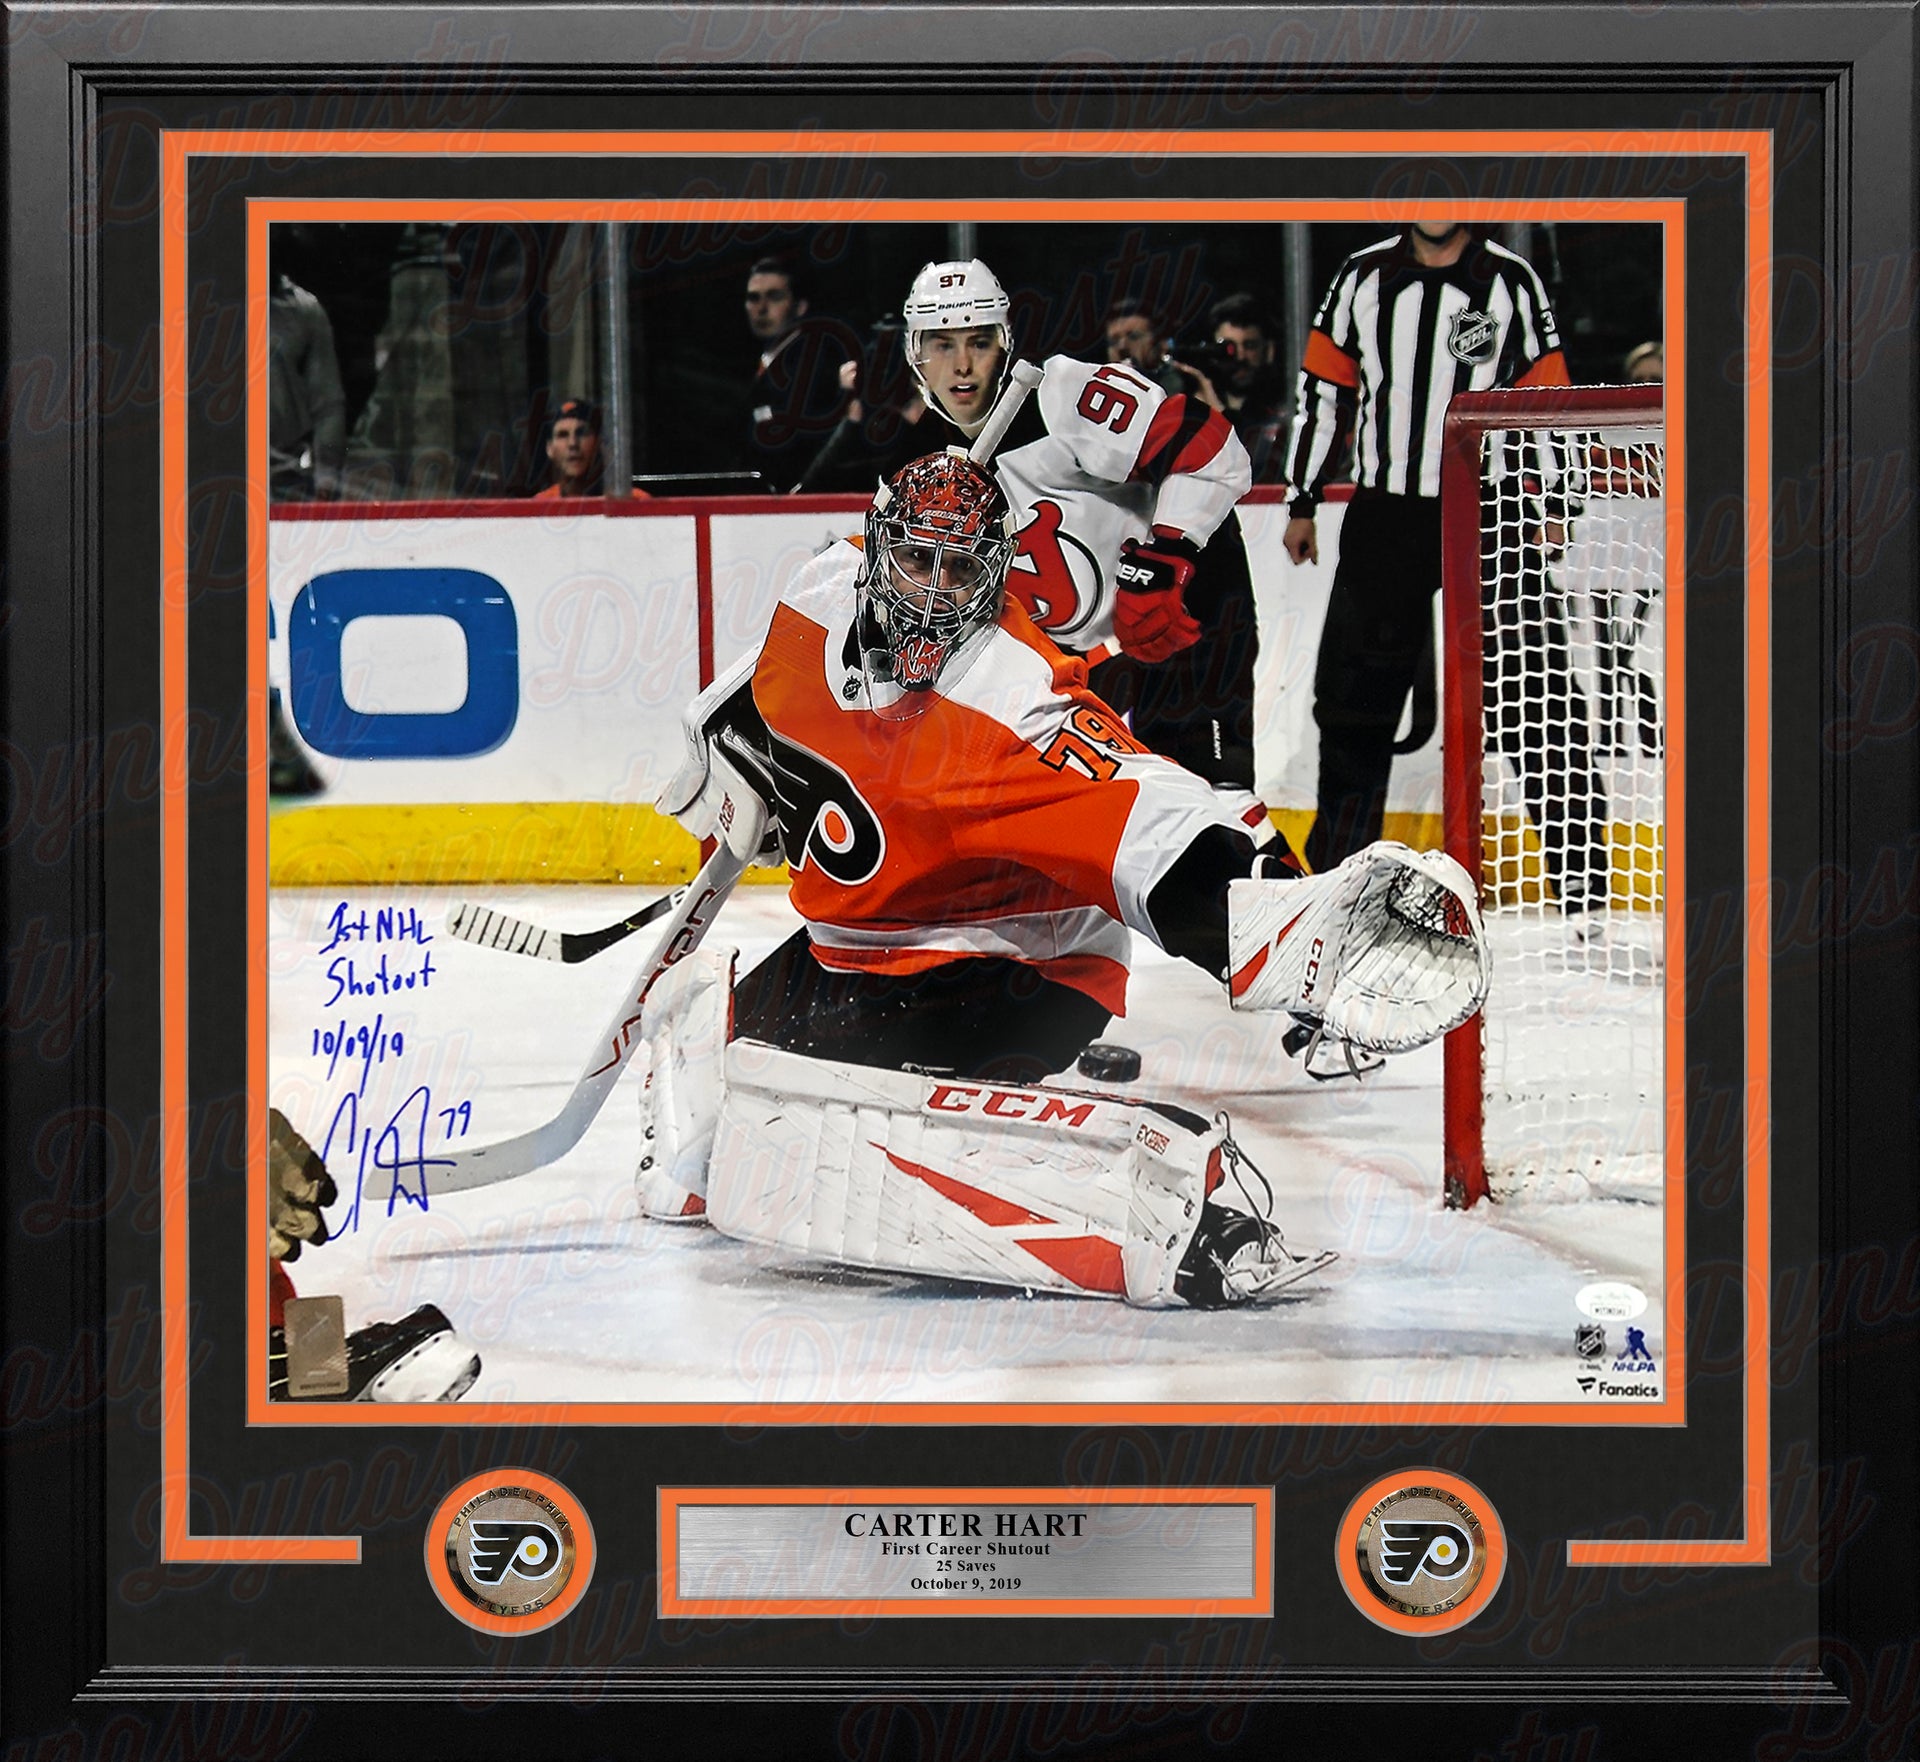 Carter Hart Philadelphia Flyers First Career Shutout Autographed Framed Hockey Photo - Dynasty Sports & Framing 